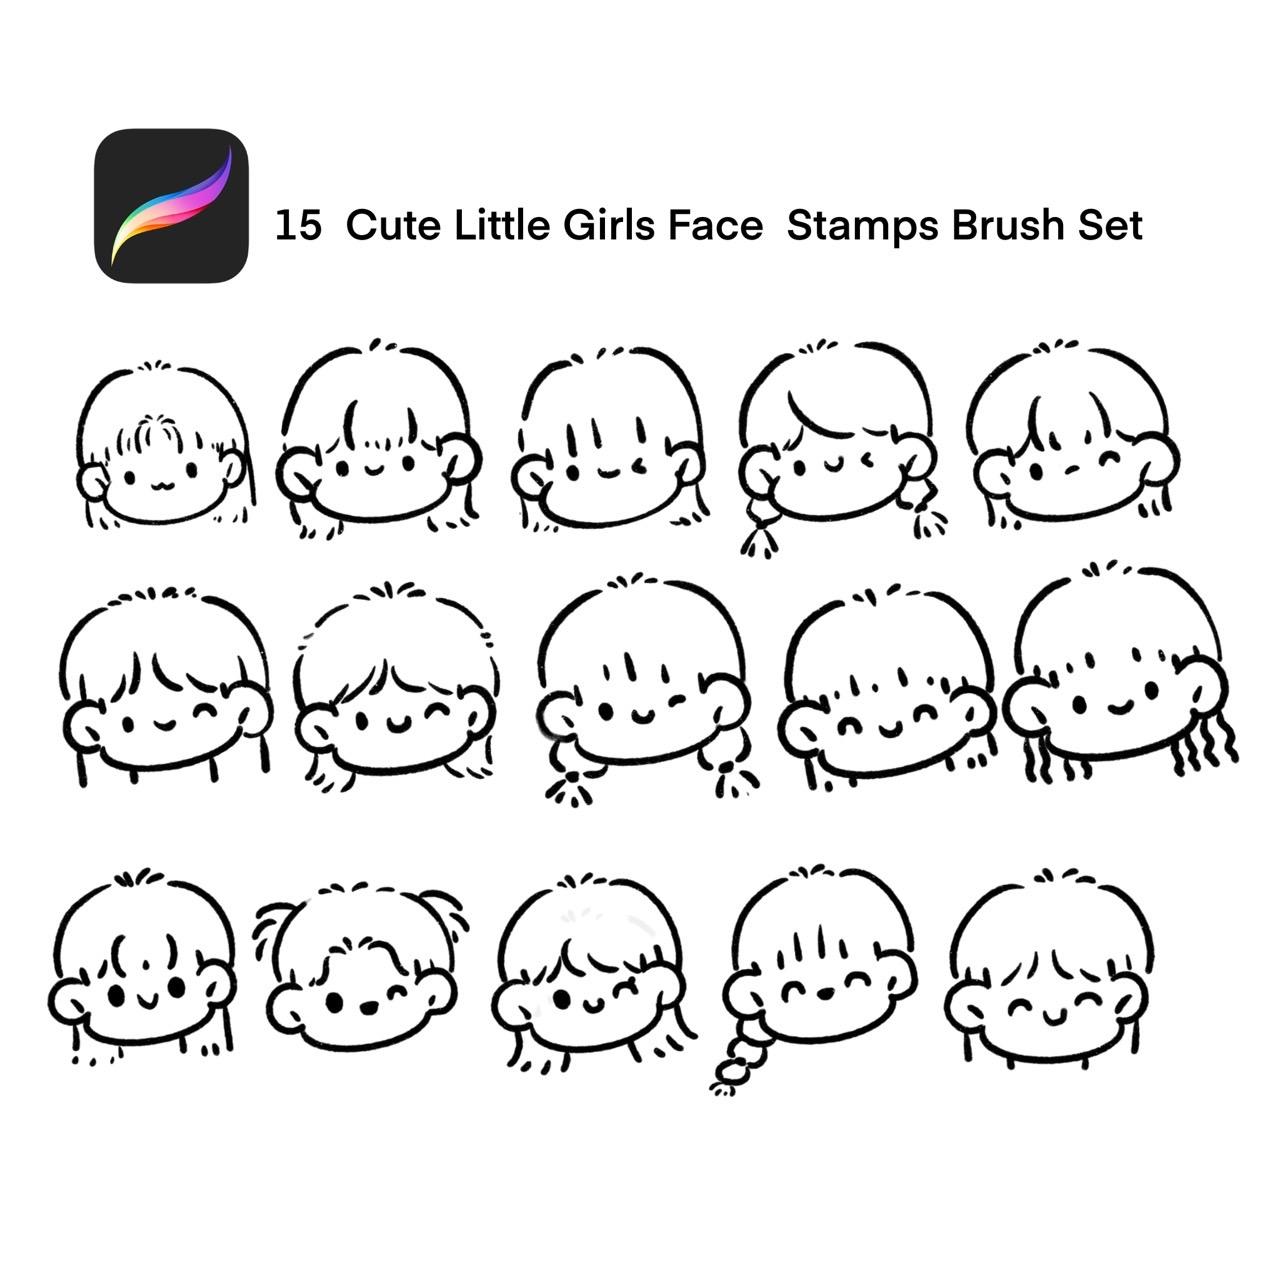 15 Cute Little Girls Face Stamps Brush Set